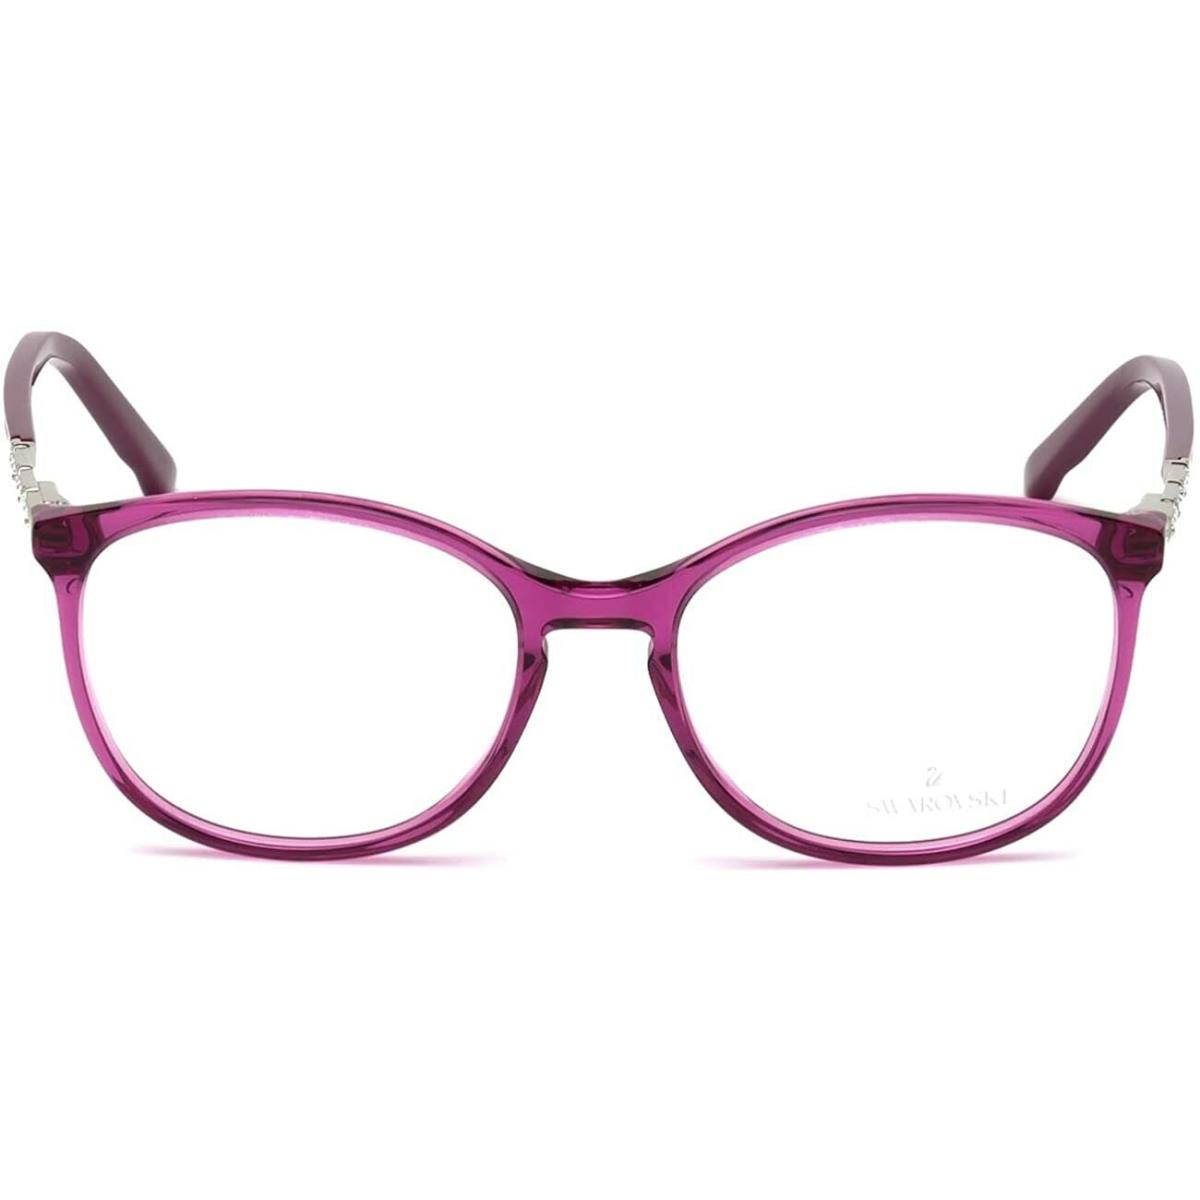 Swarovski Fancy SW 5163 Violet/silver 081 Plastic Eyeglasses Frame 52-17-140